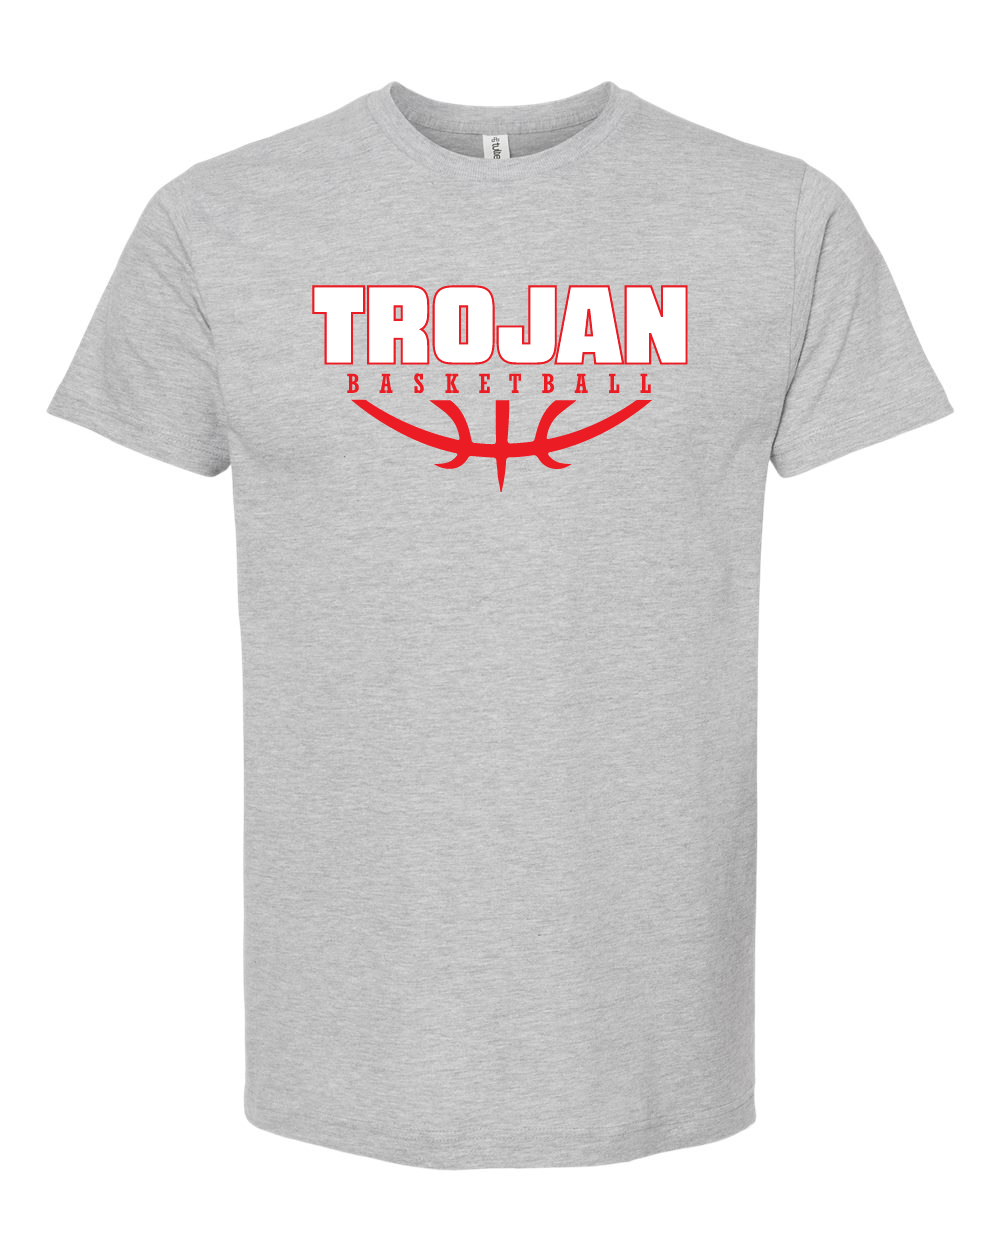 Trojan Basketball Ribs Shirt